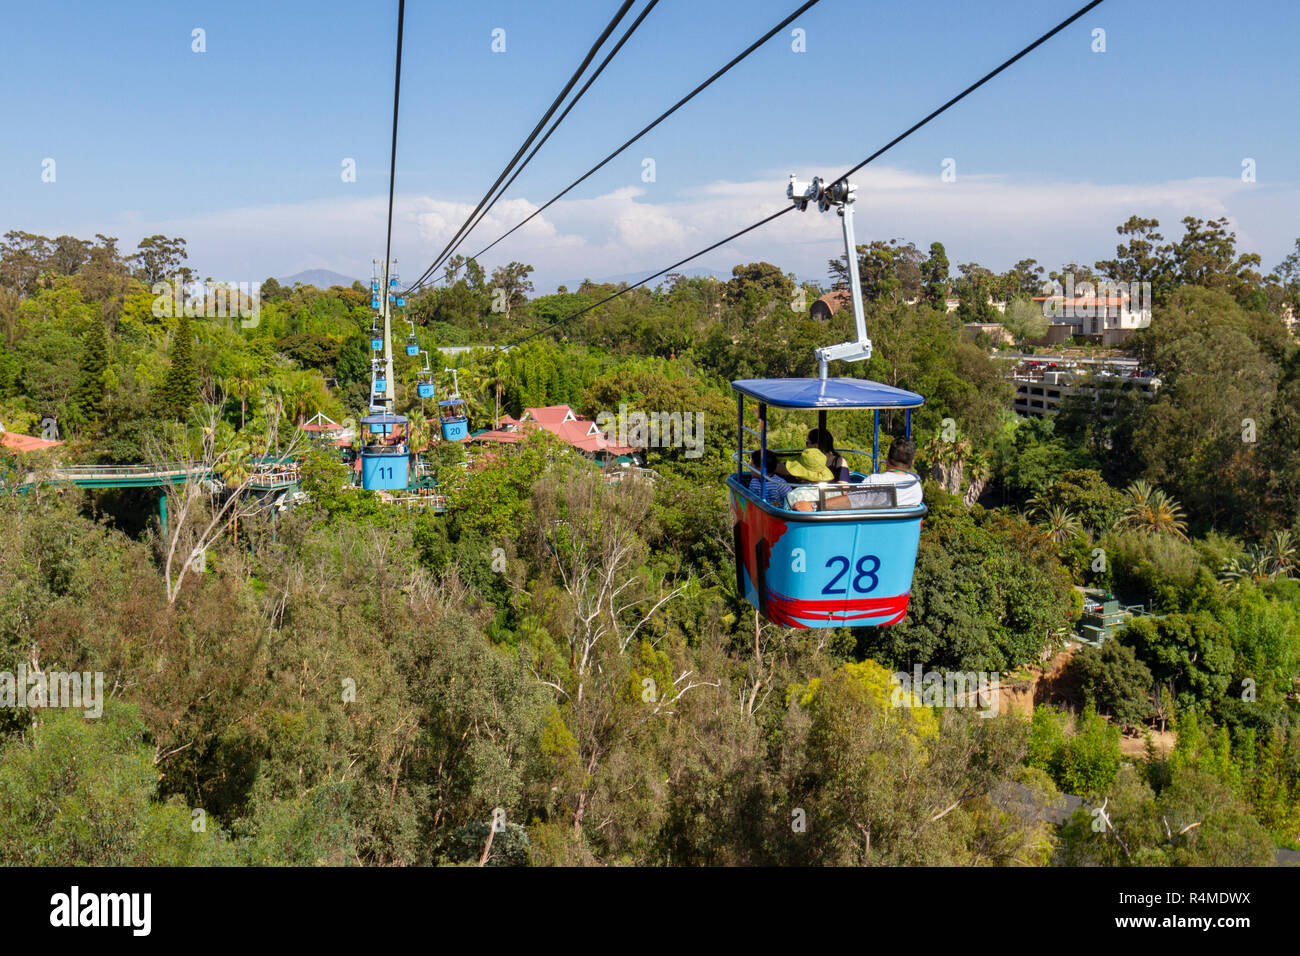 The Skyfari aerial tram/cable car, San Diego Zoo, Balboa Park, California, United States. Stock Photo